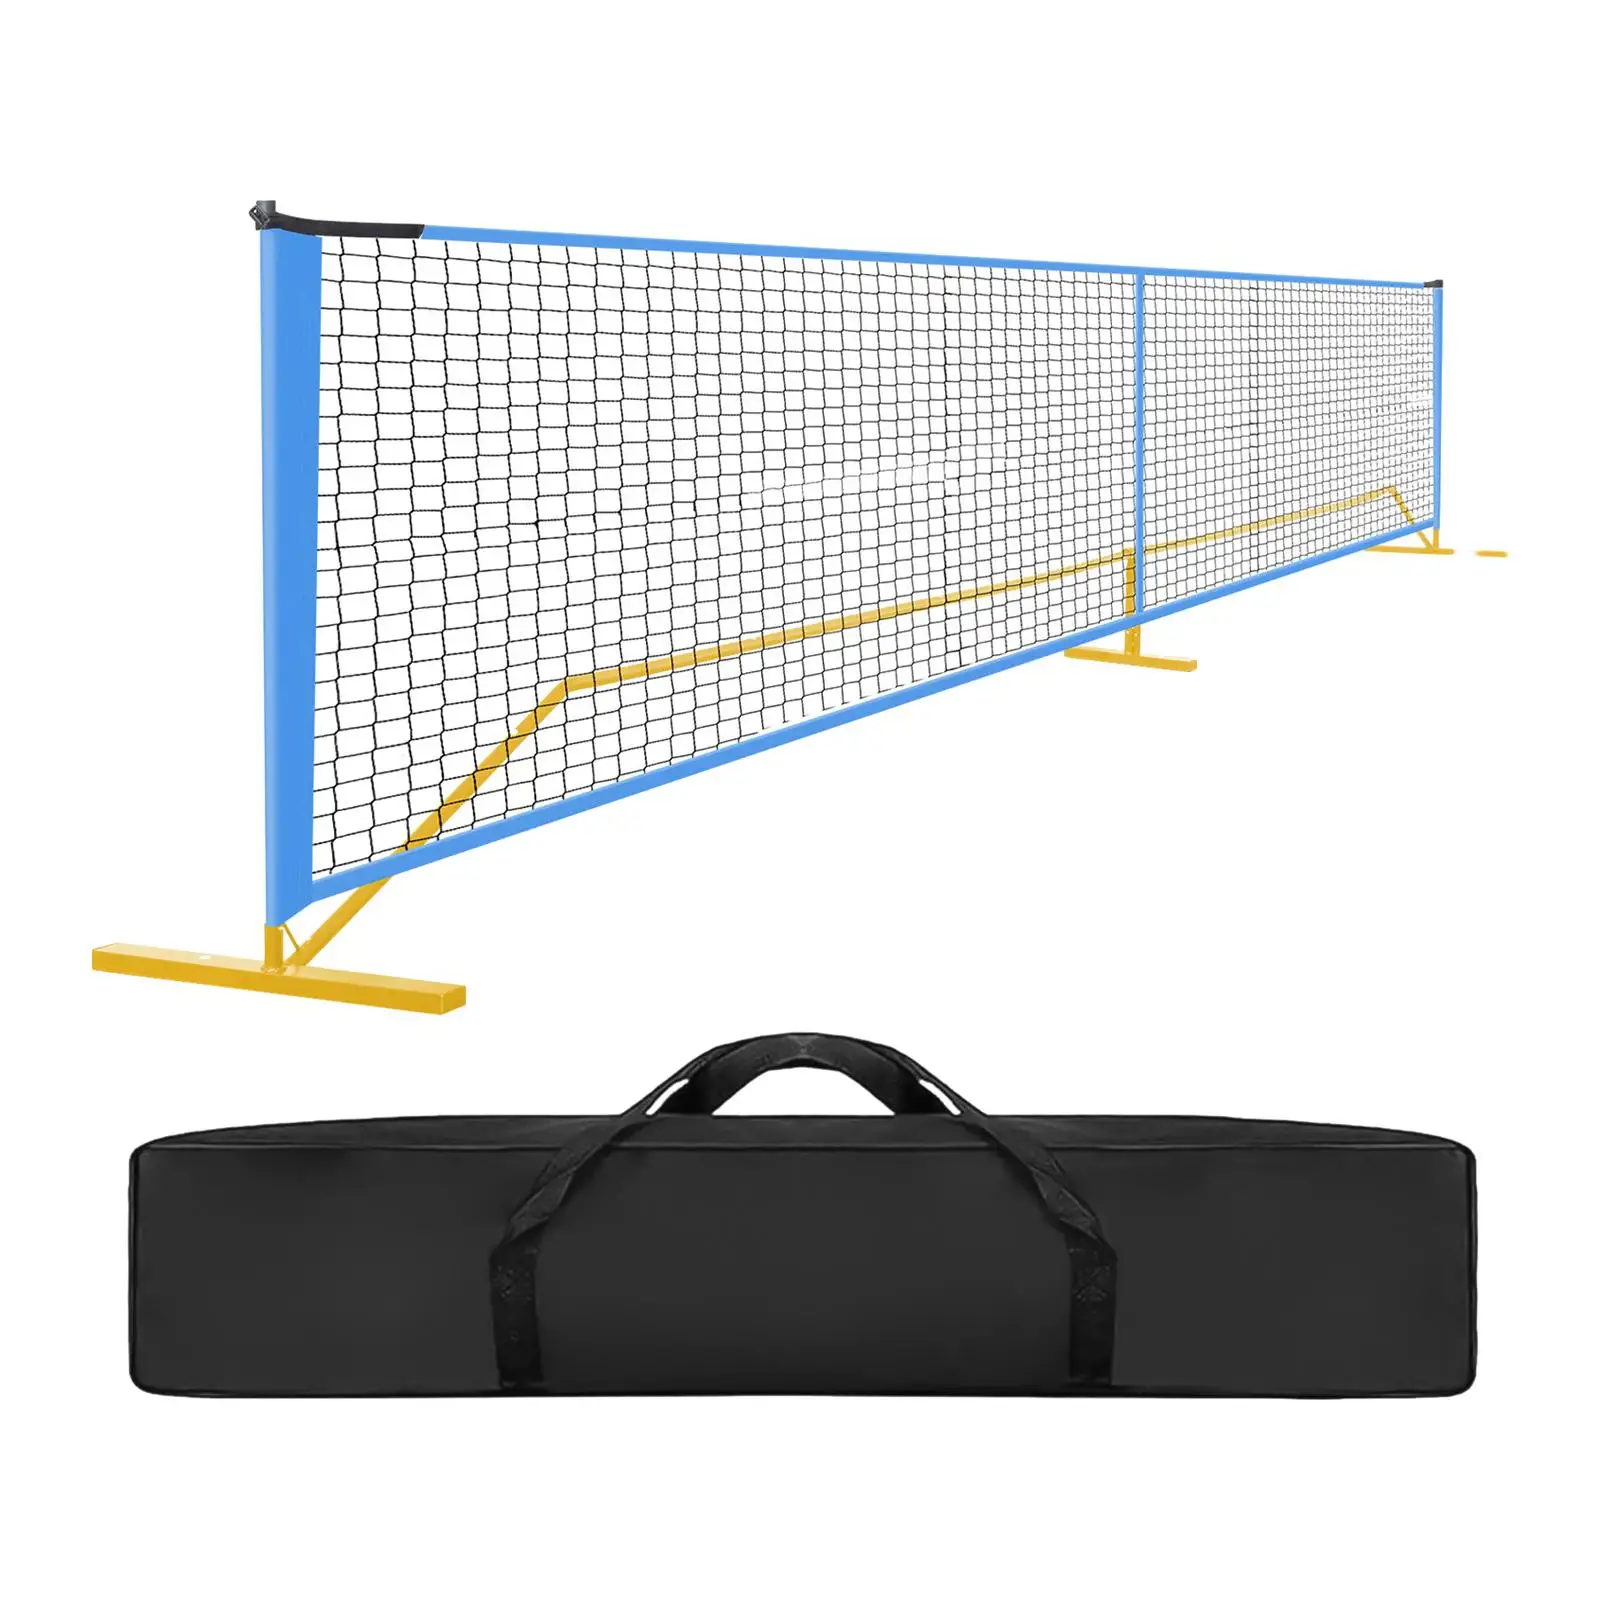 Portable Pickleball Net with Metal Frame Stand Easy Setup Badminton Net for